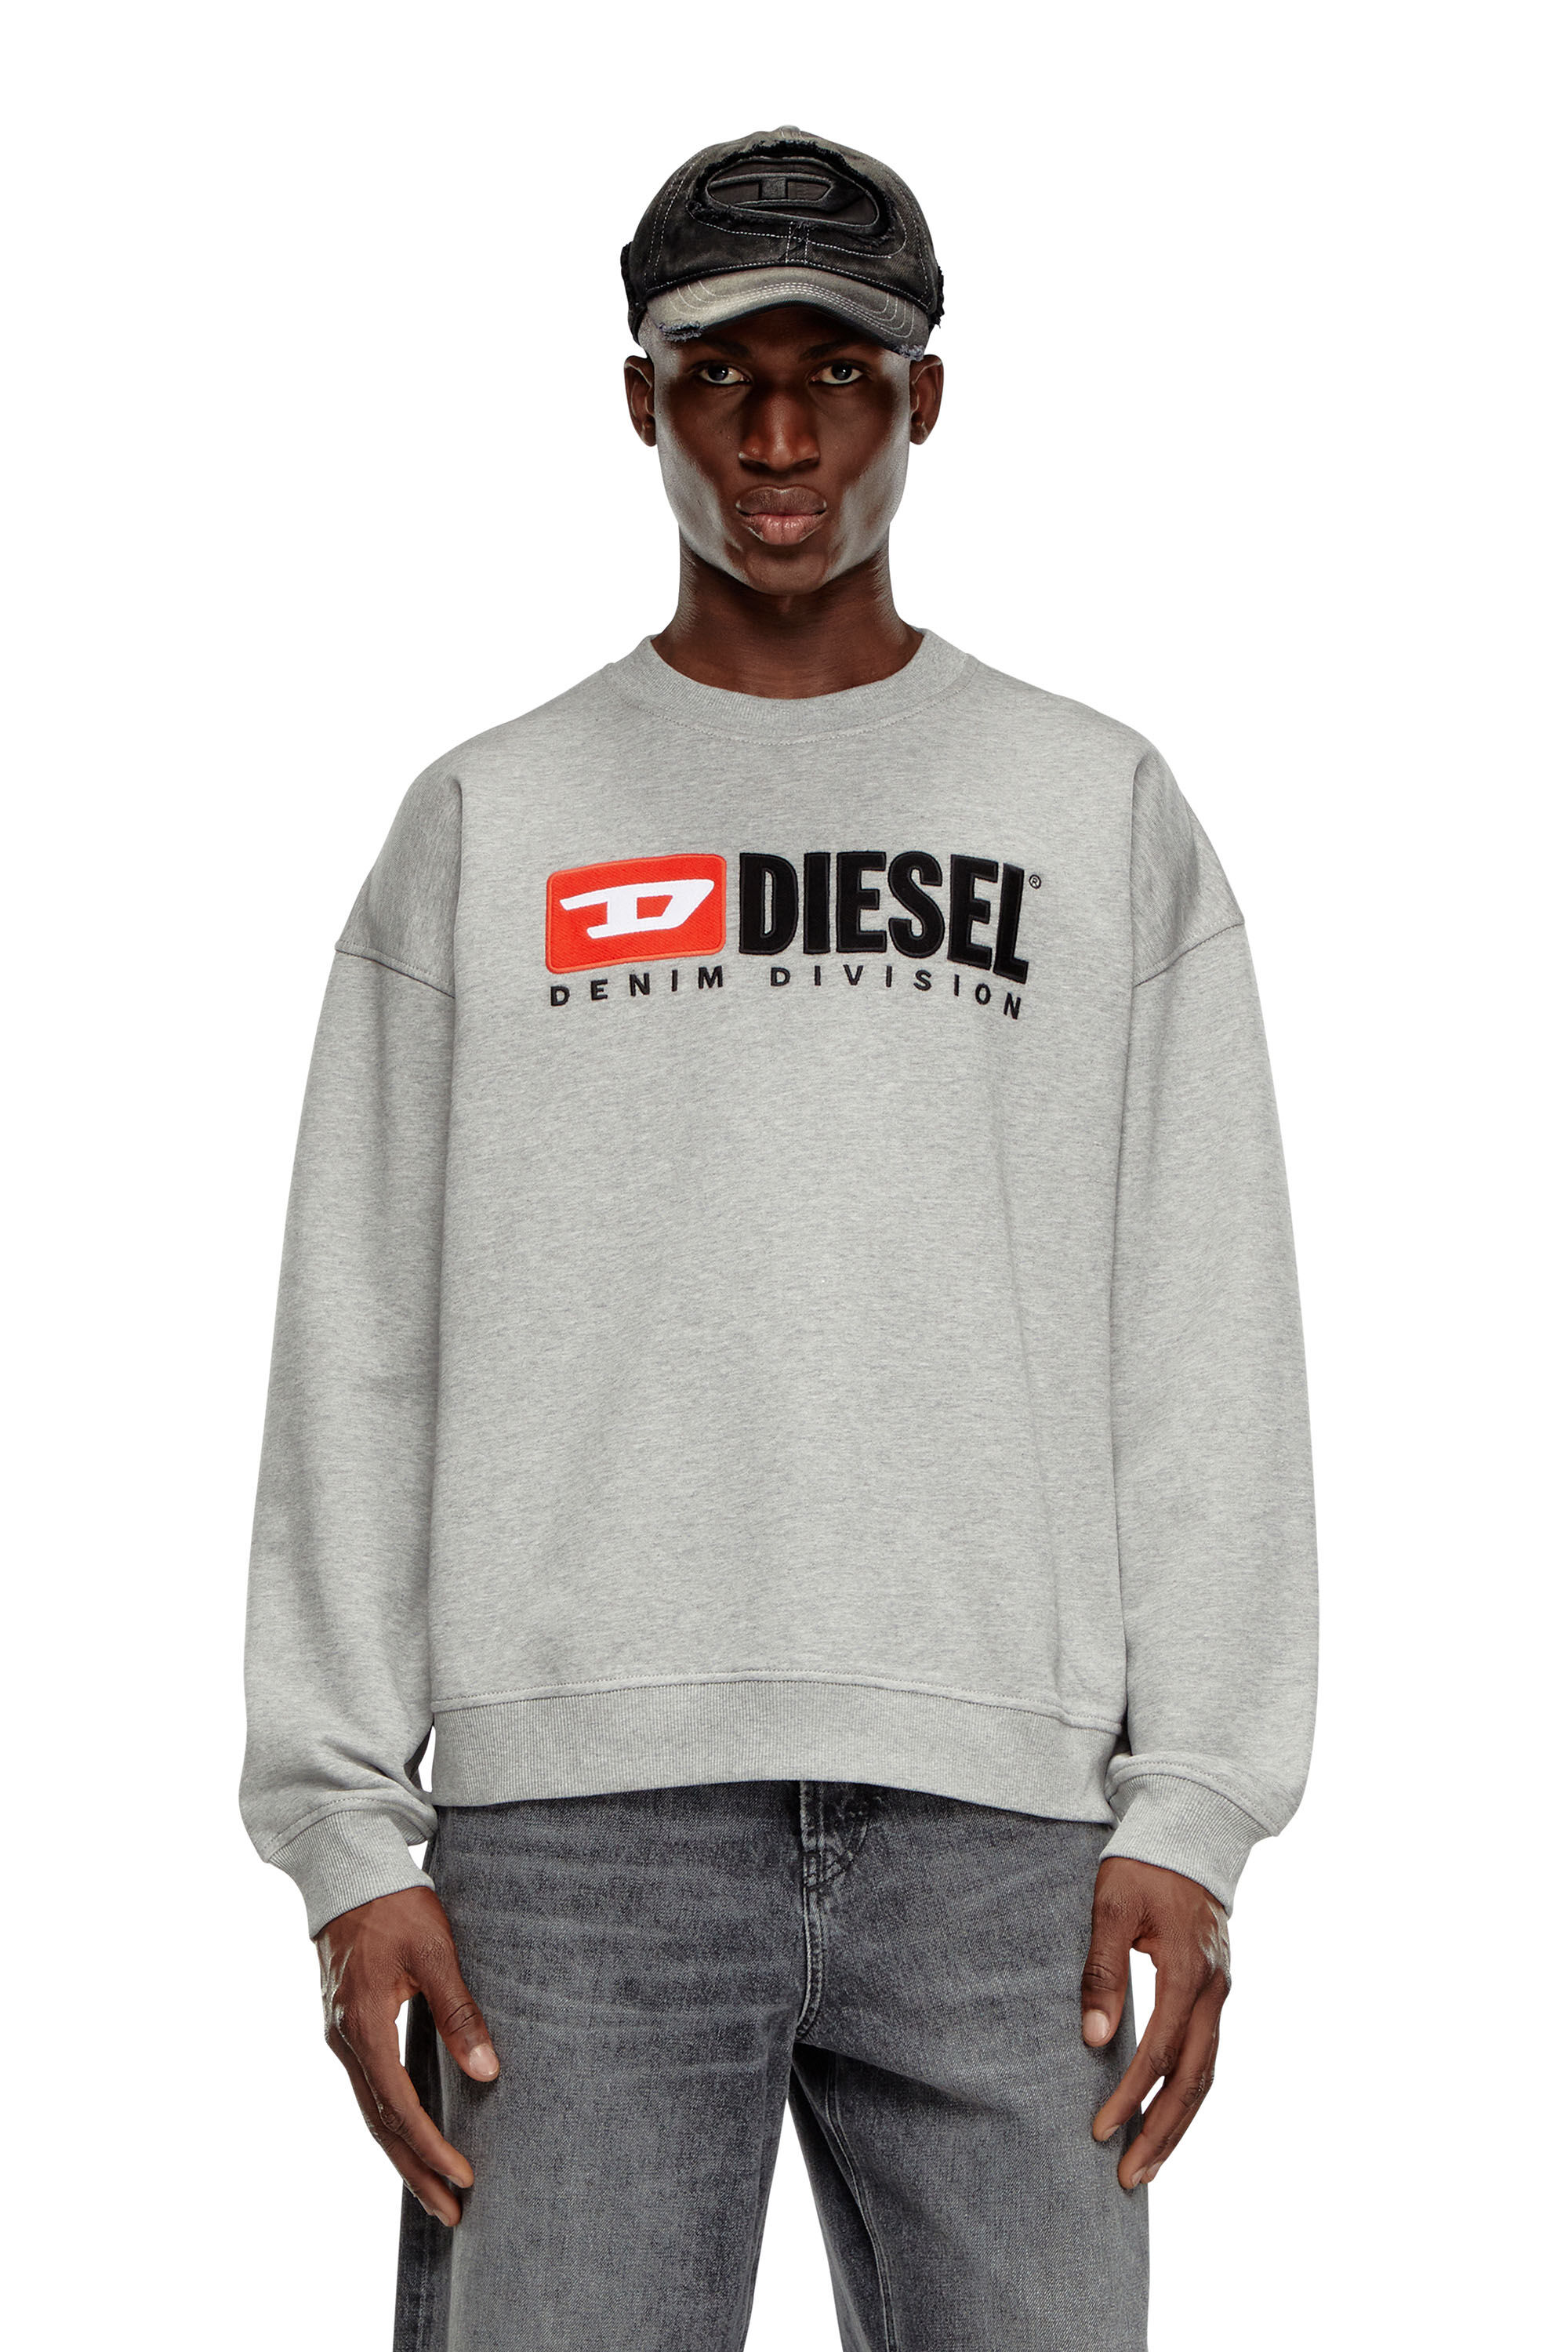 Diesel - S-BOXT-DIV, Homme Sweat-shirt avec logo Denim Division in Gris - Image 3